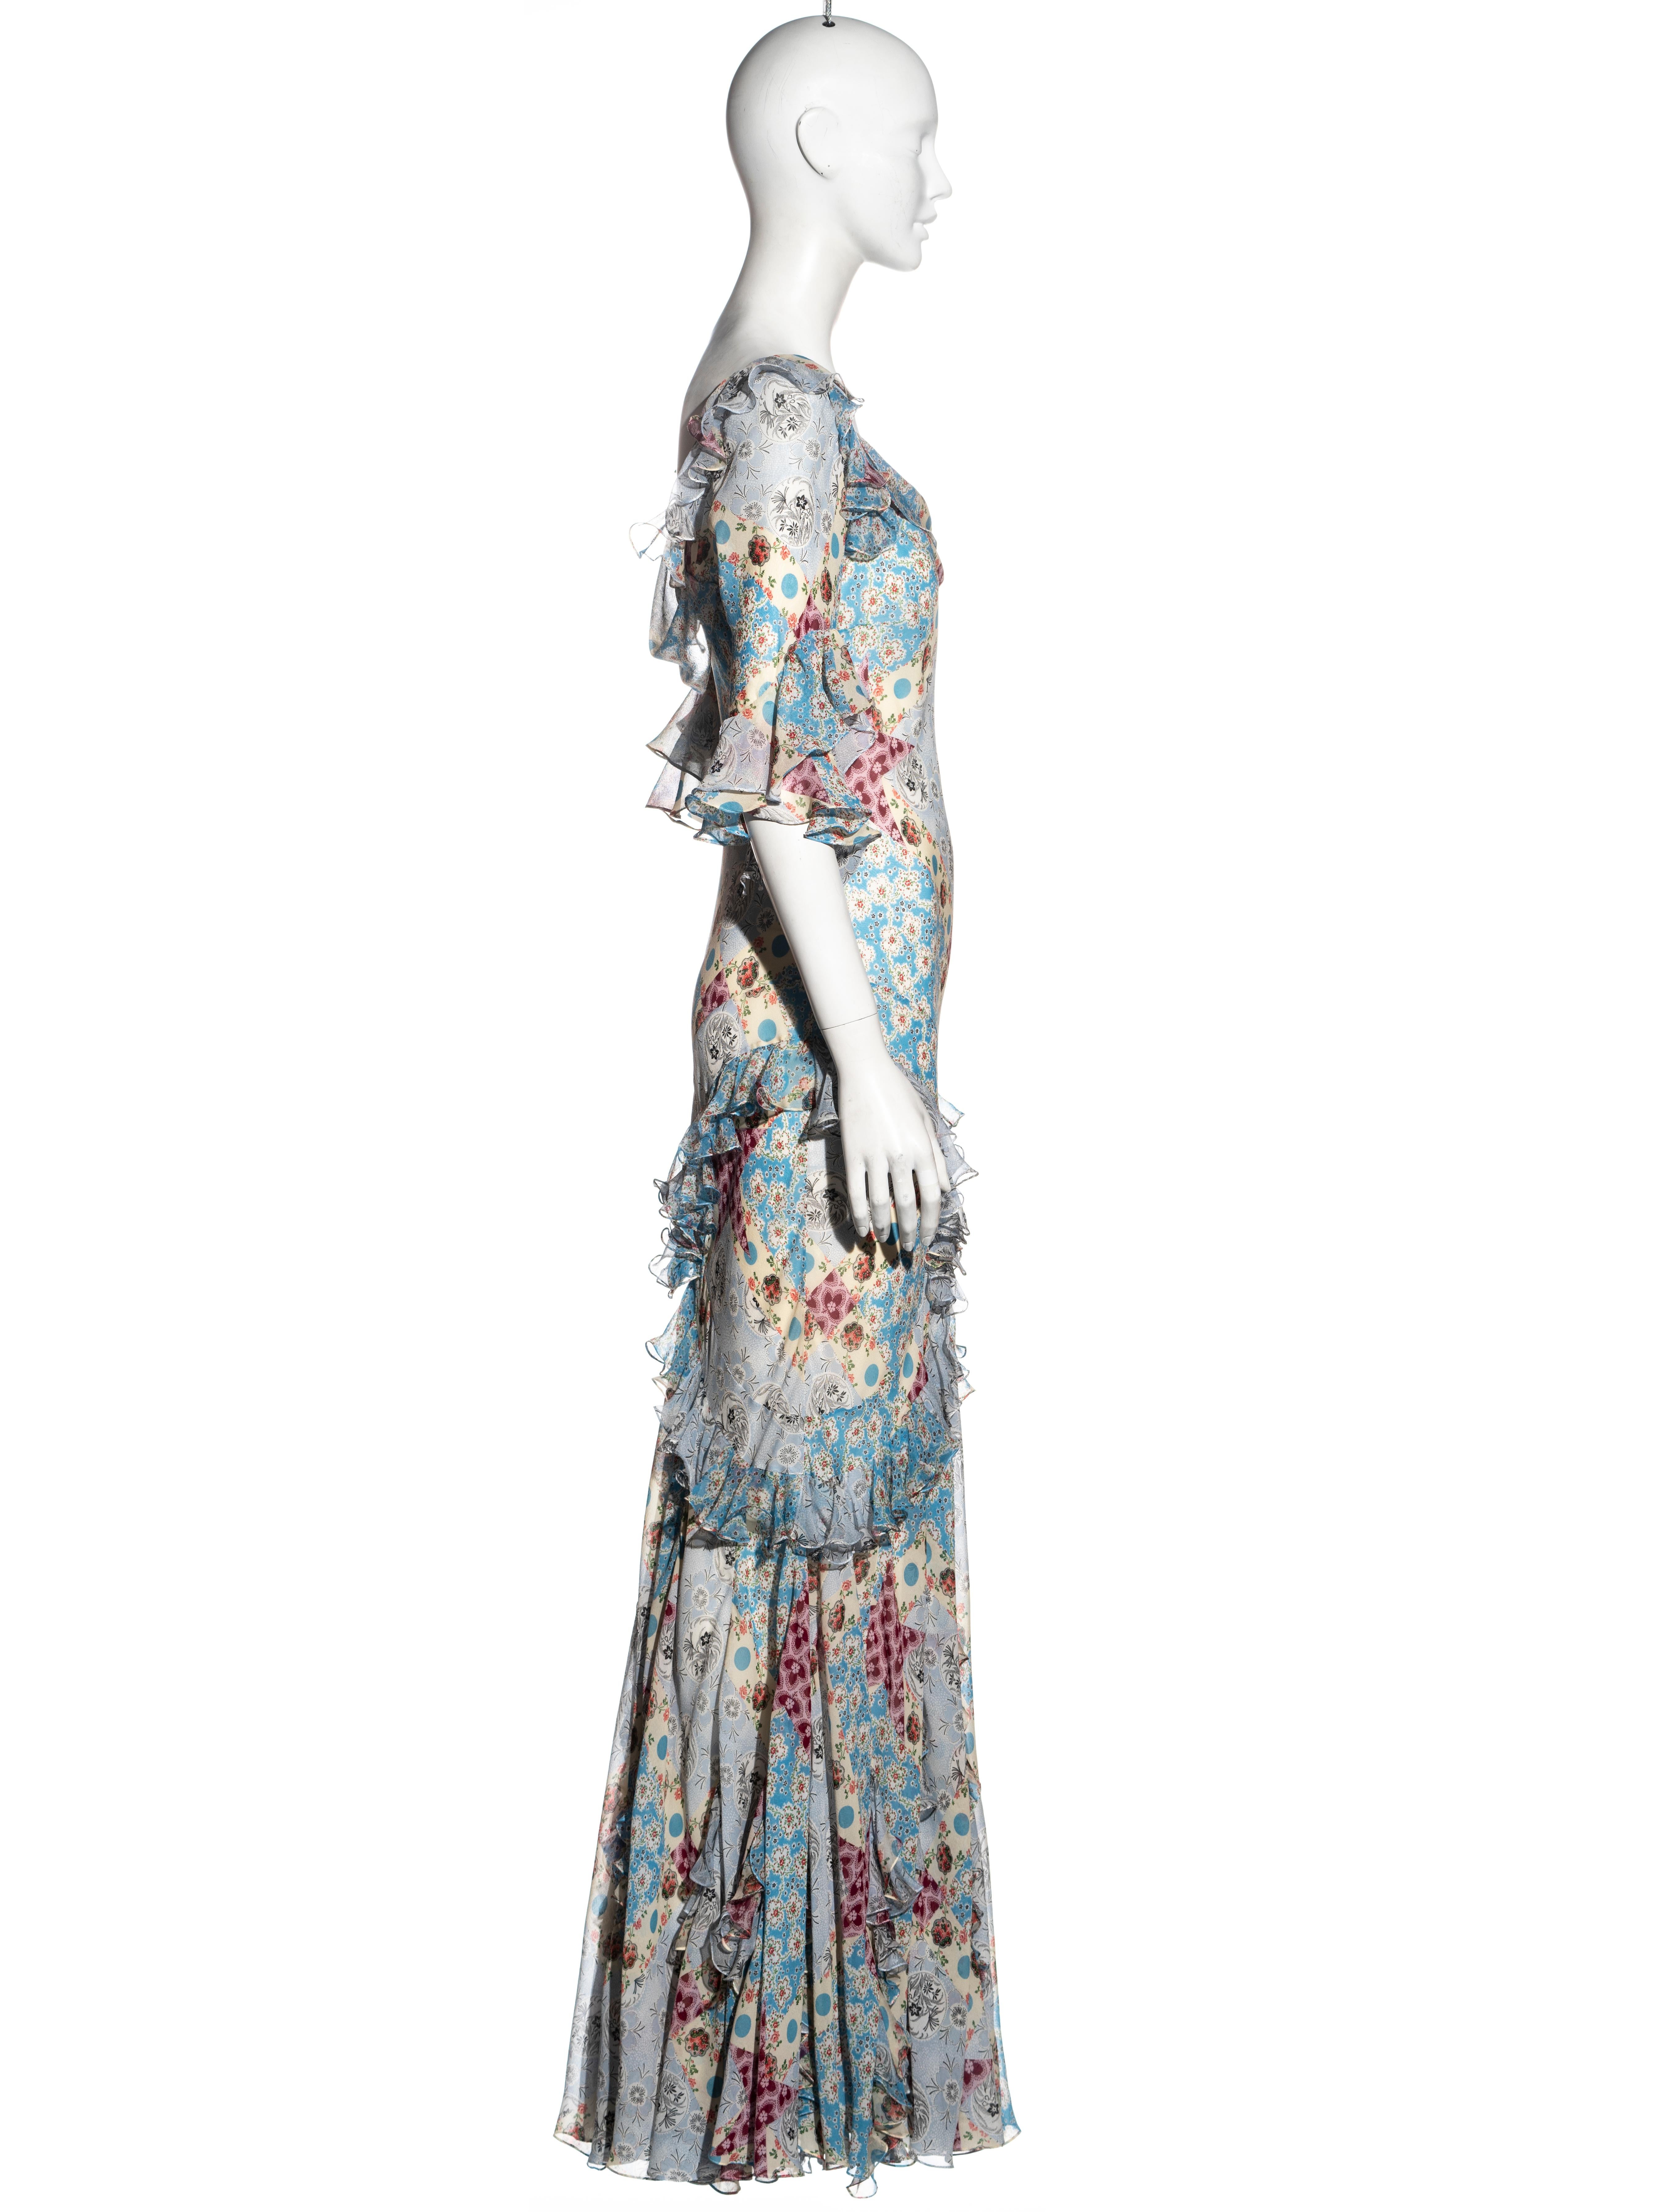 Women's John Galliano floral printed silk chiffon bias cut evening dress, fw 2002